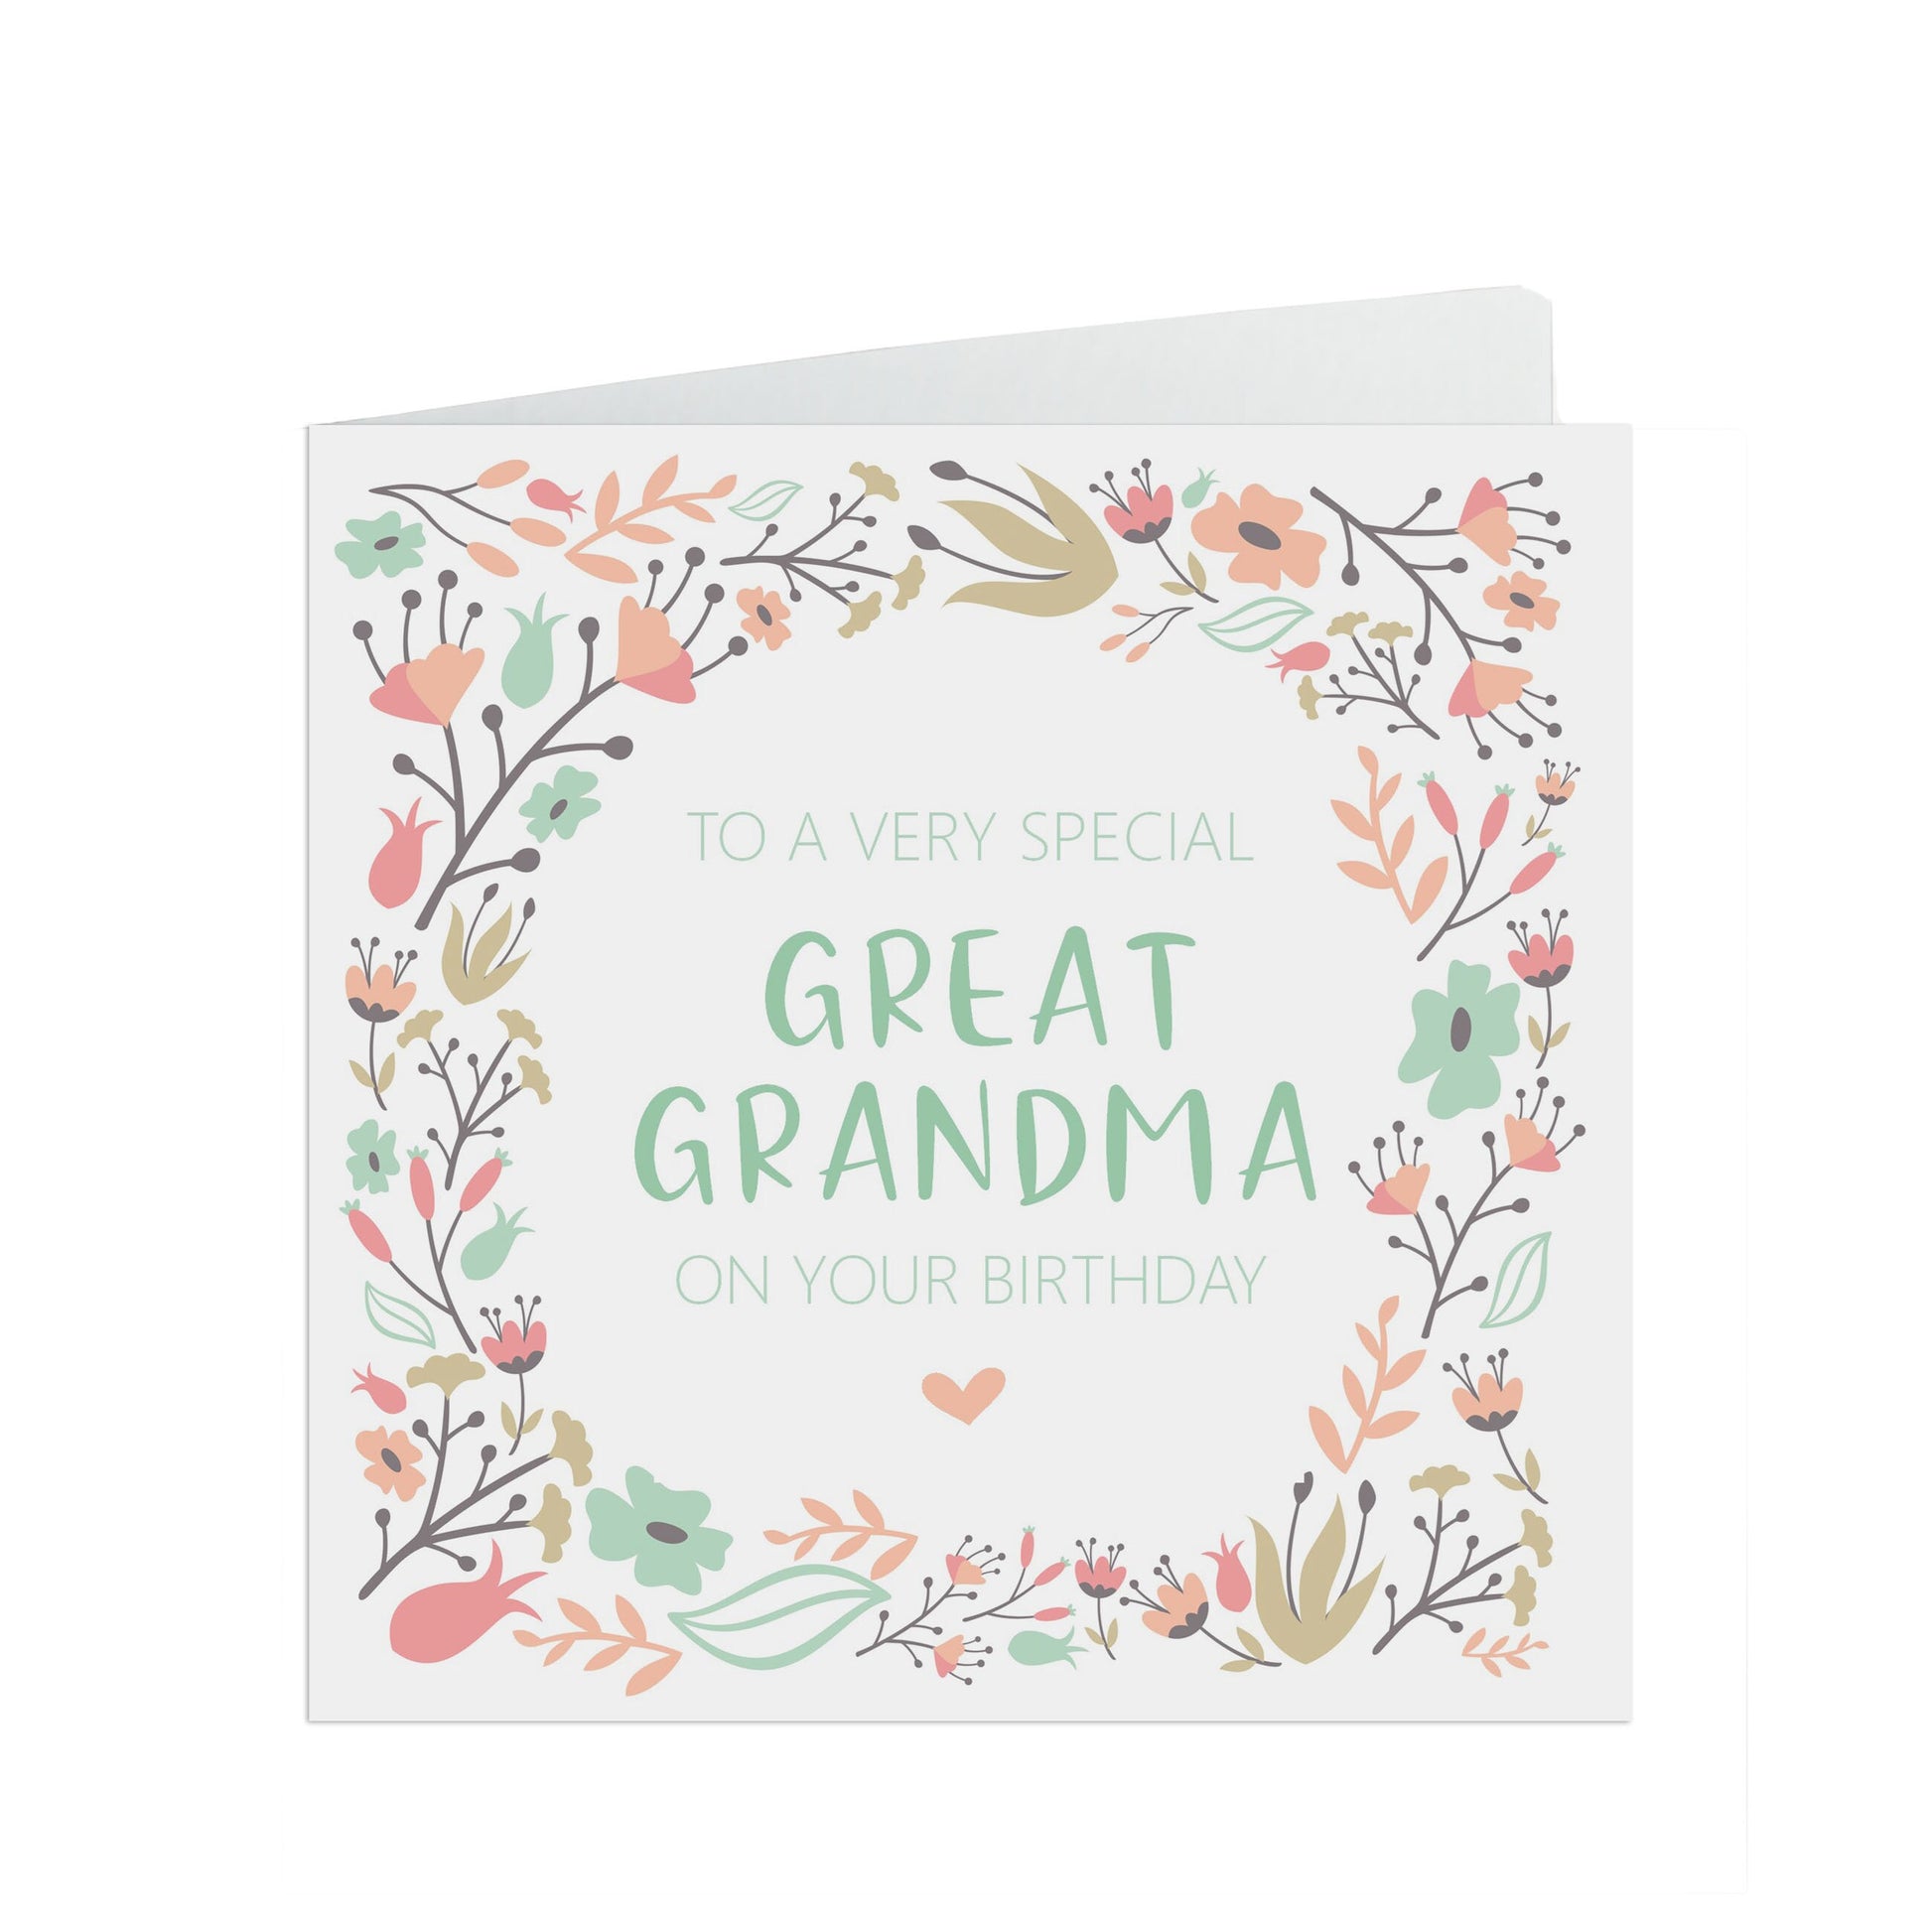 Great Grandma Birthday Card, Sage & Peach Flower Design